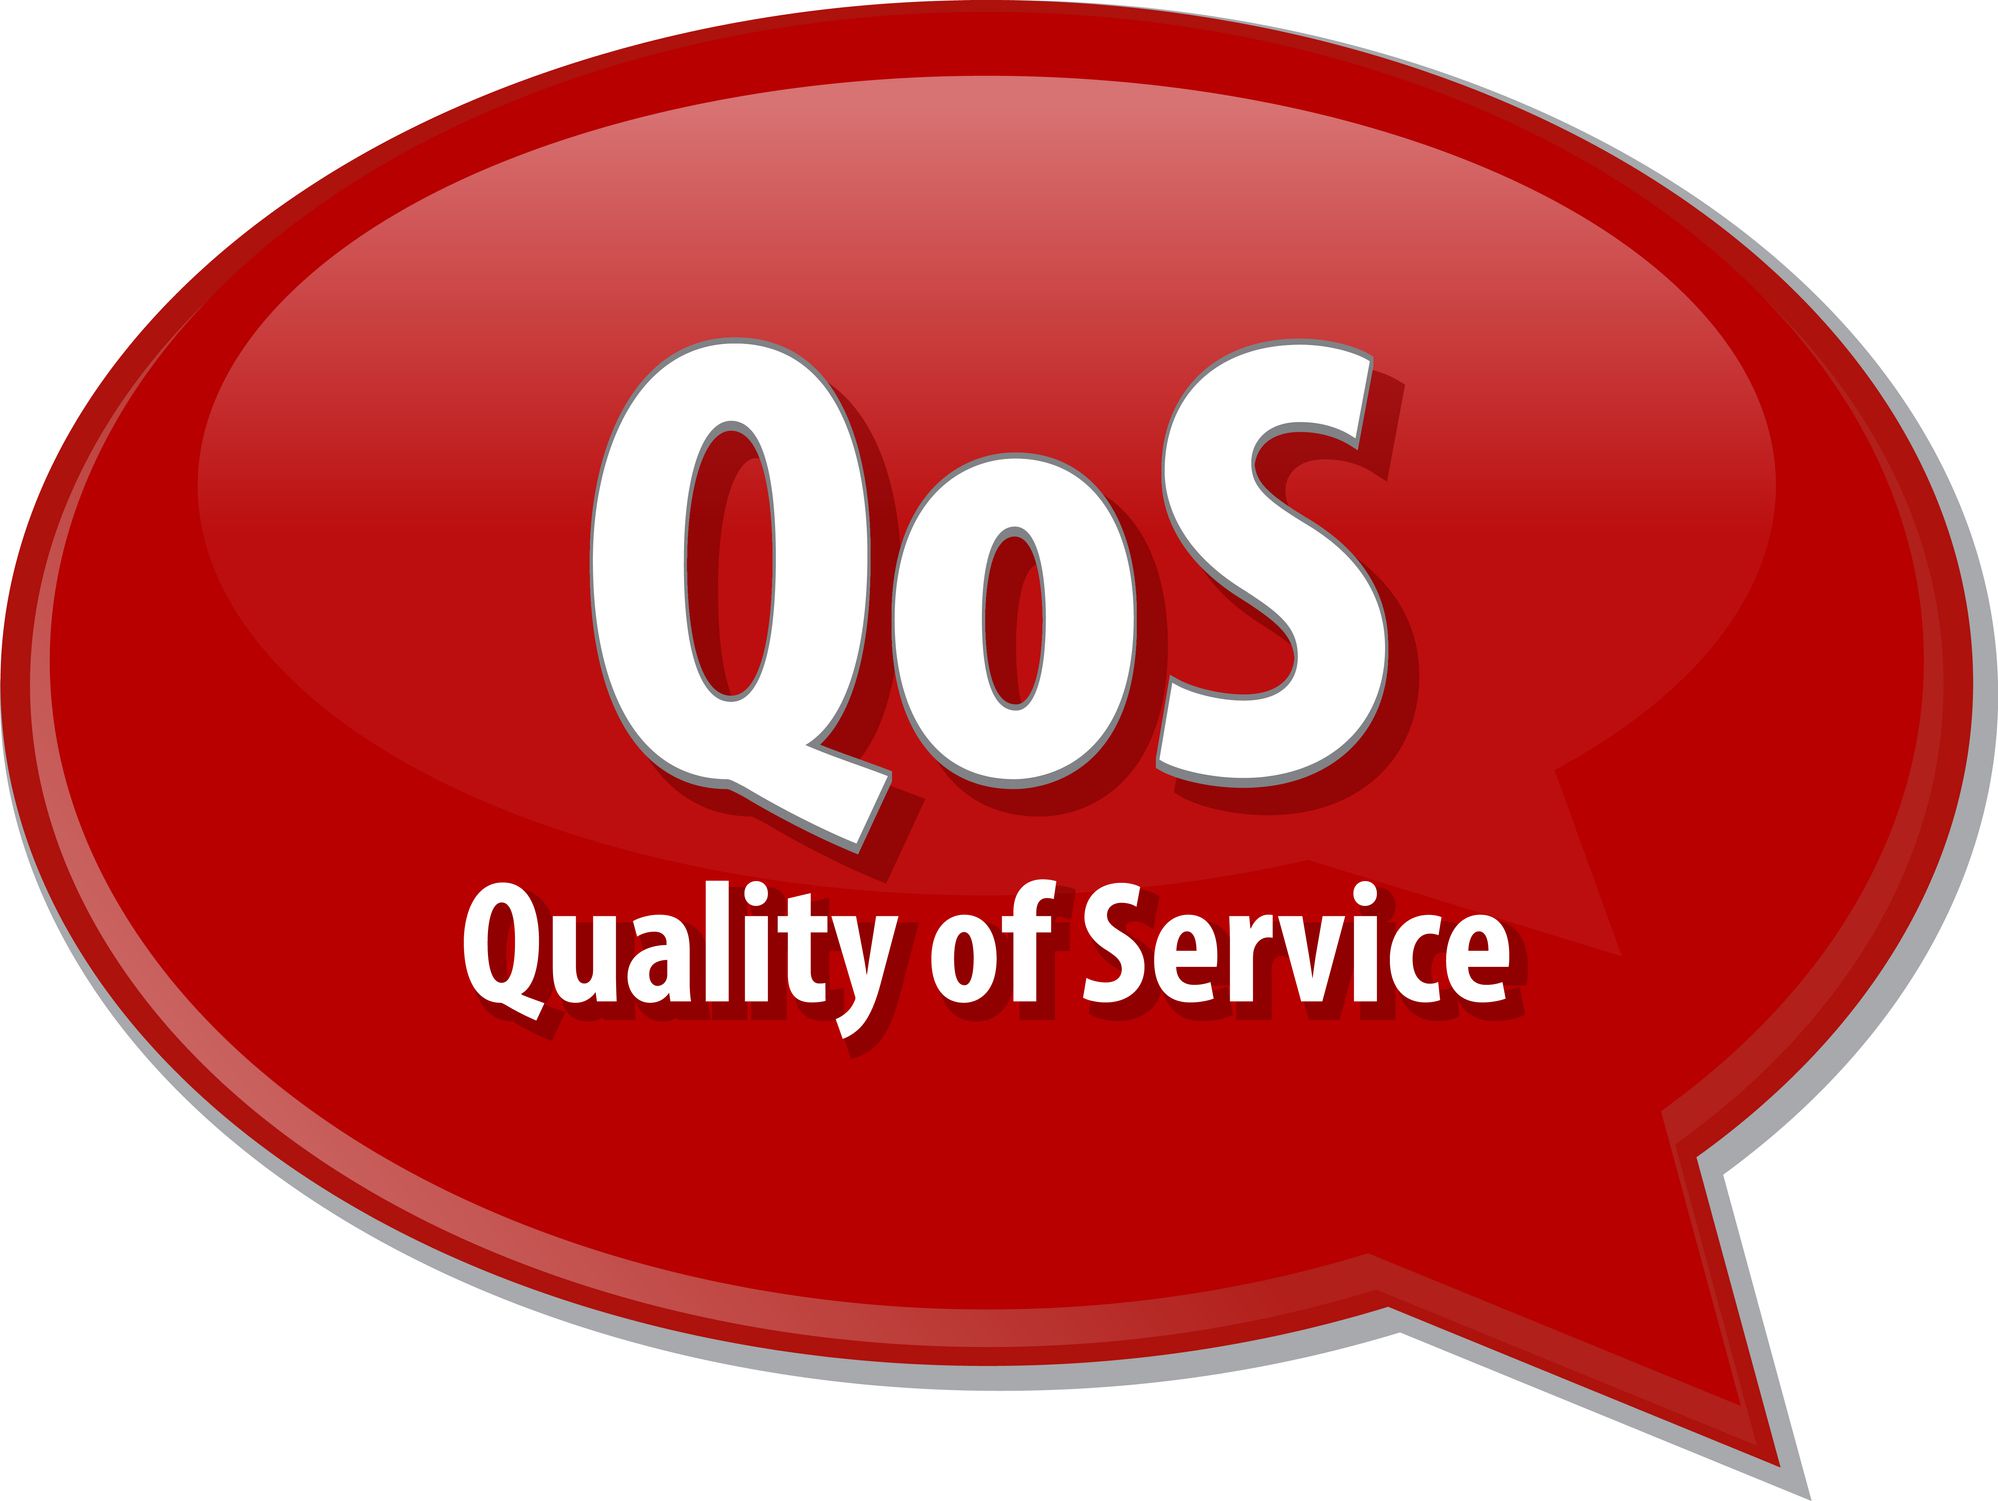 Q0S Quality of Service dialoogballon